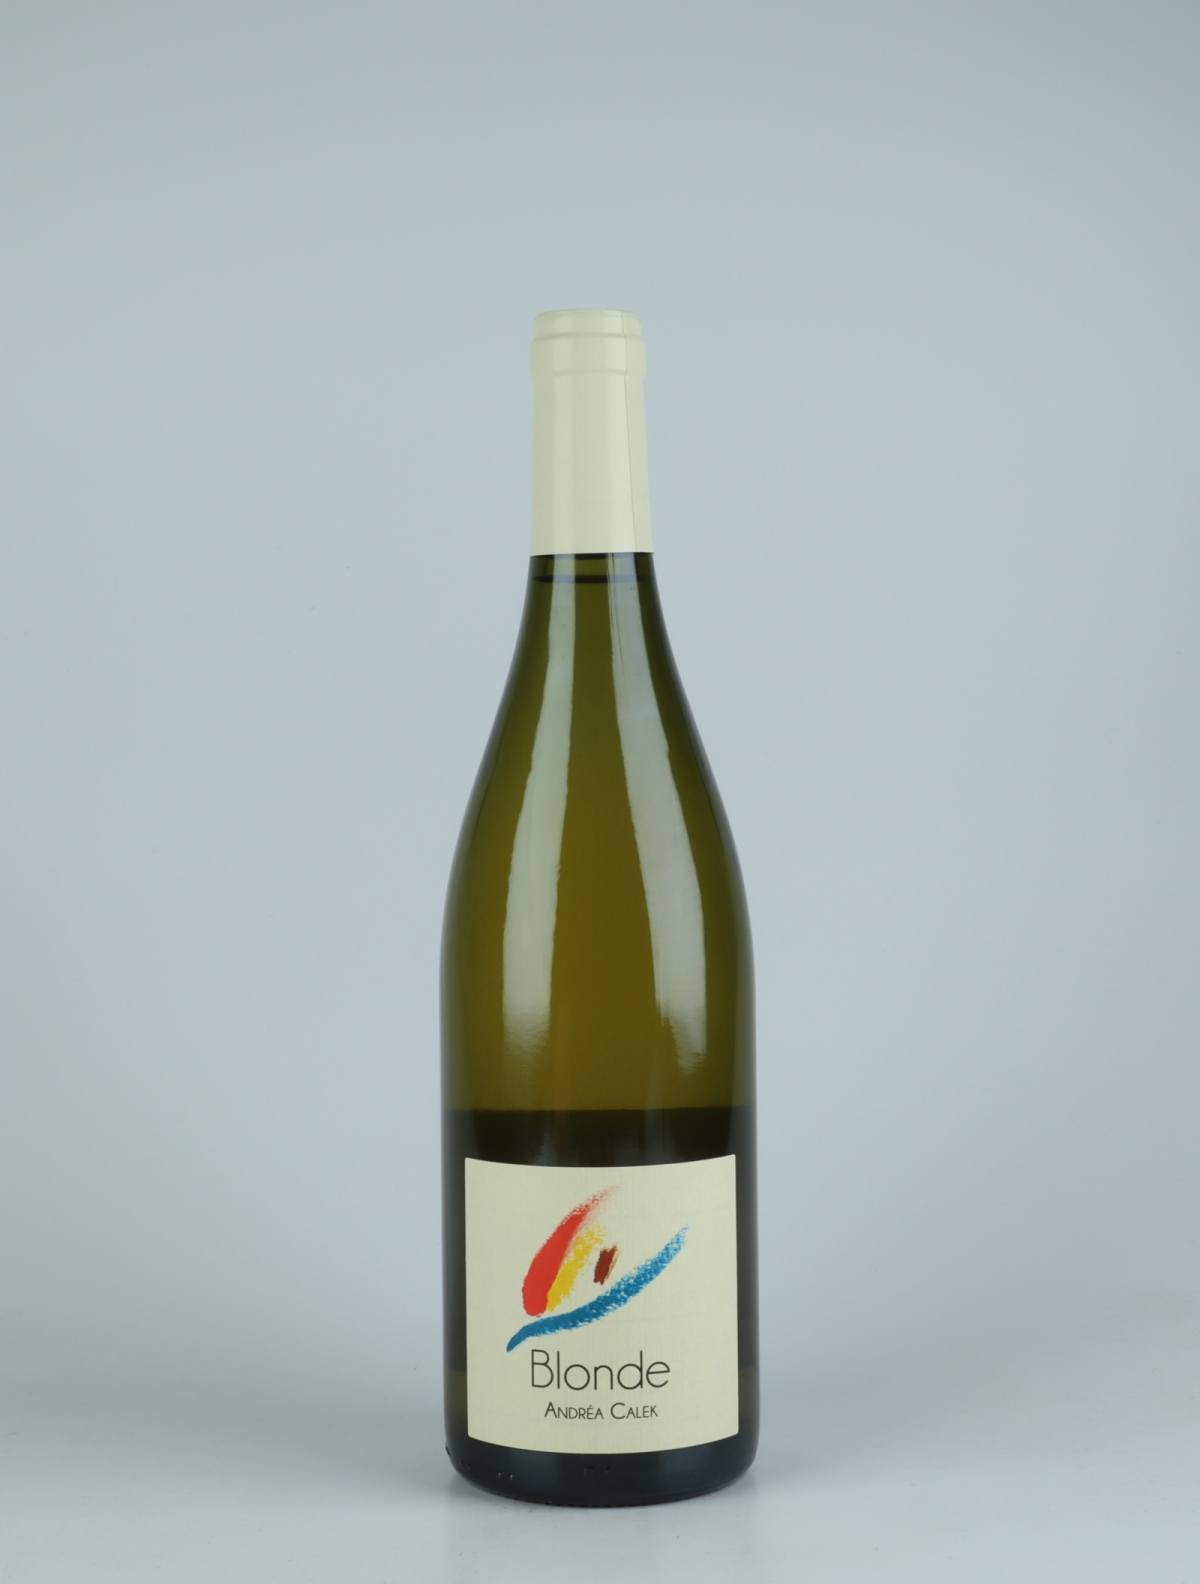 A bottle 2020 Blonde White wine from Andrea Calek, Ardèche in France